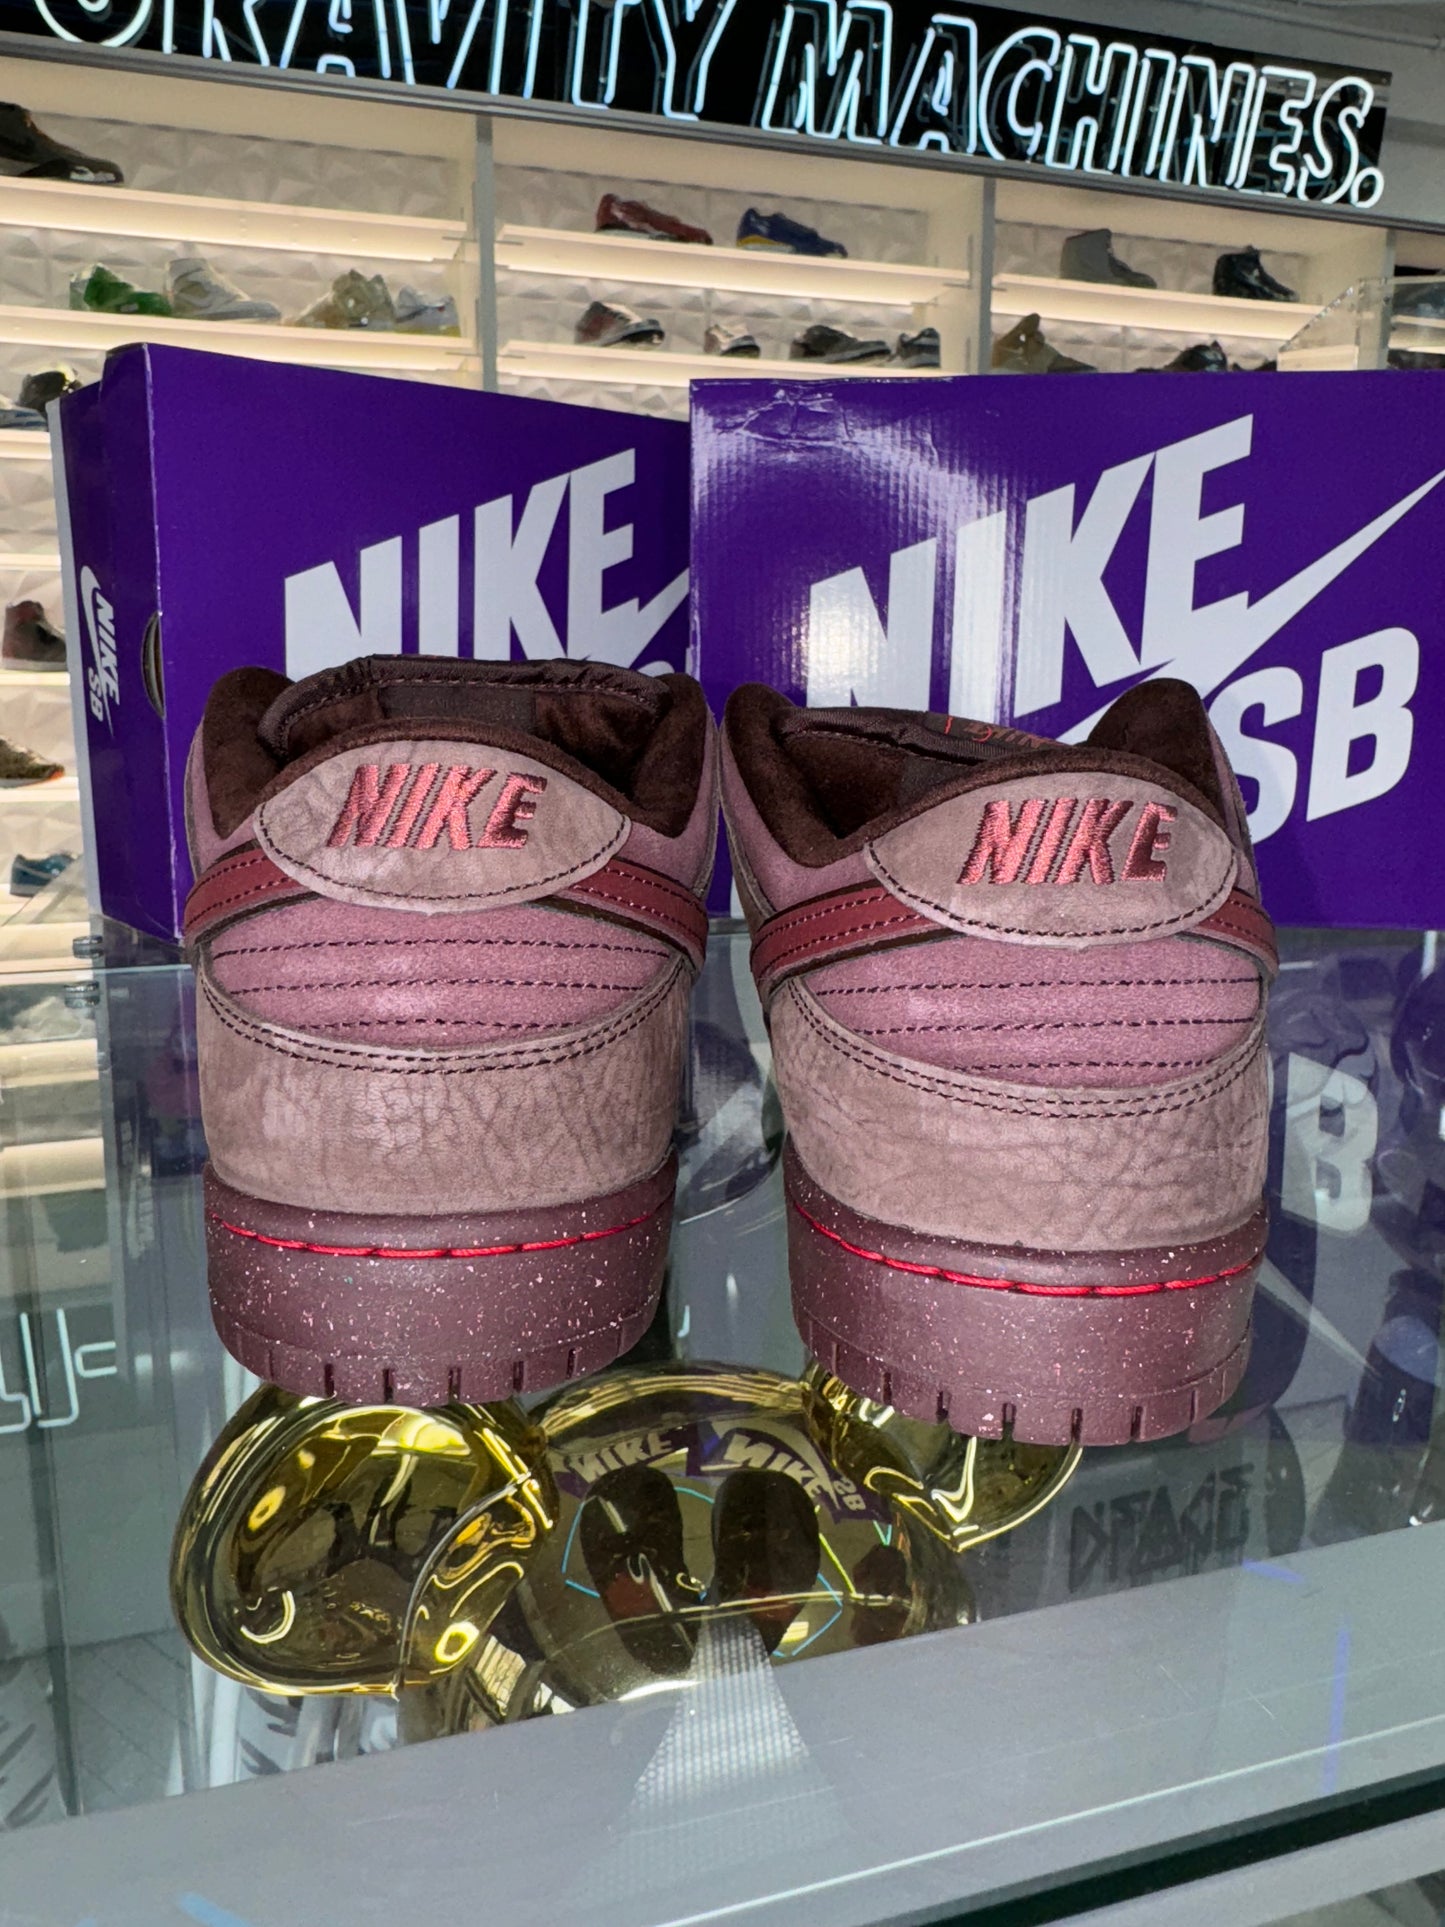 Nike SB Dunk Low City Of Love Burgundy Crush